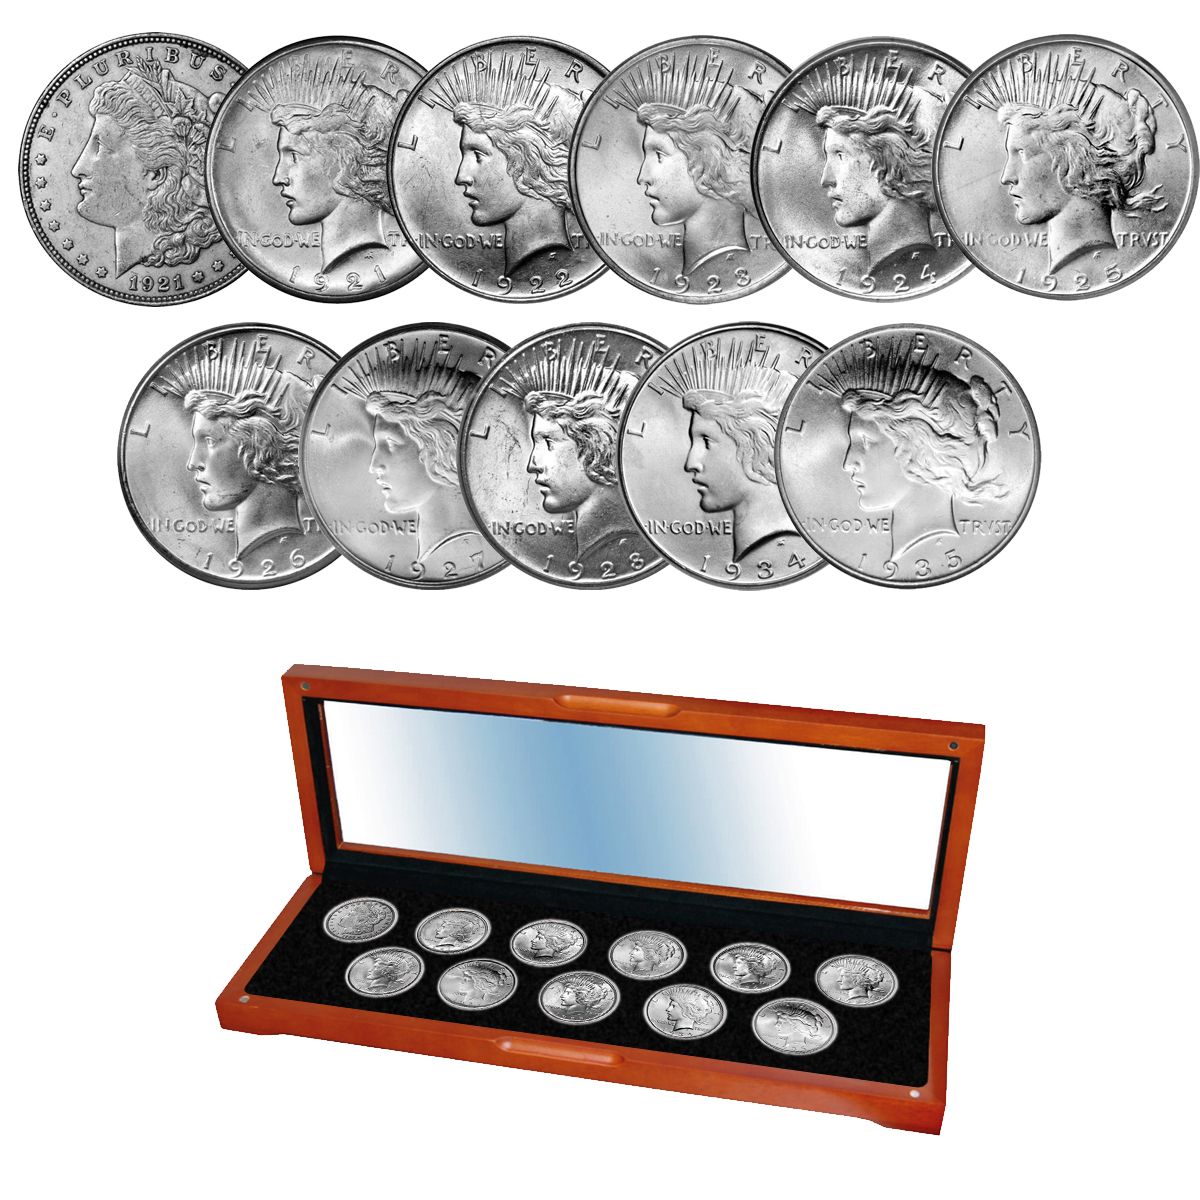 1 $1.00 1921-1935 Peace Dollar Coin Classic 90% Silver 